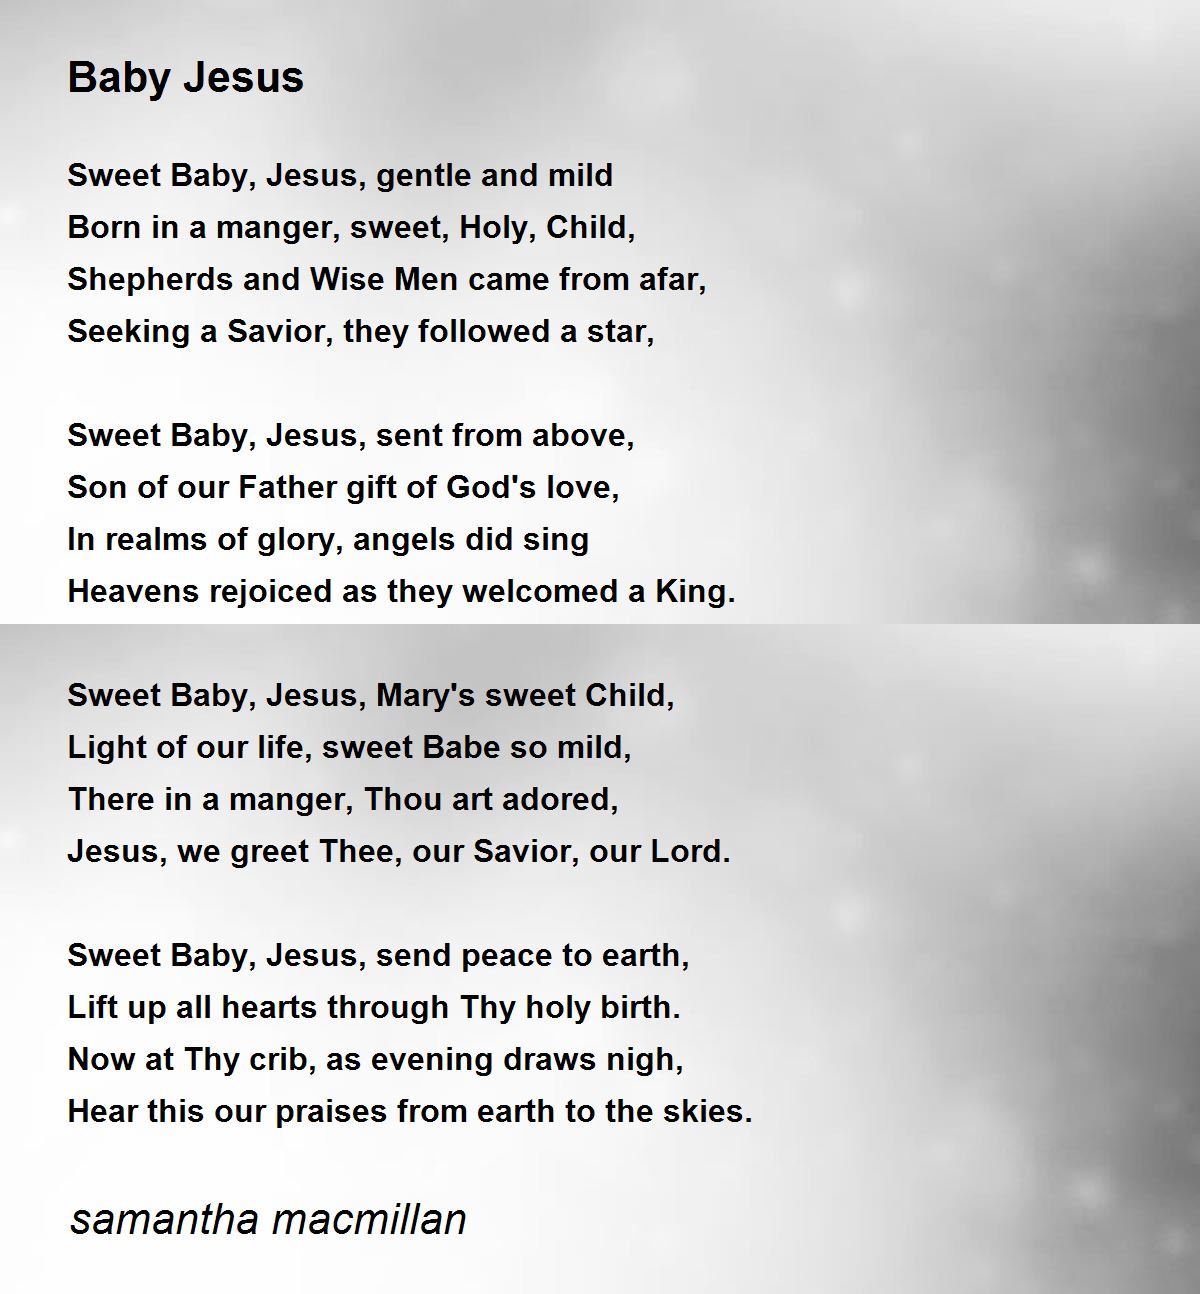 Baby Jesus - Baby Jesus Poem by samantha macmillan